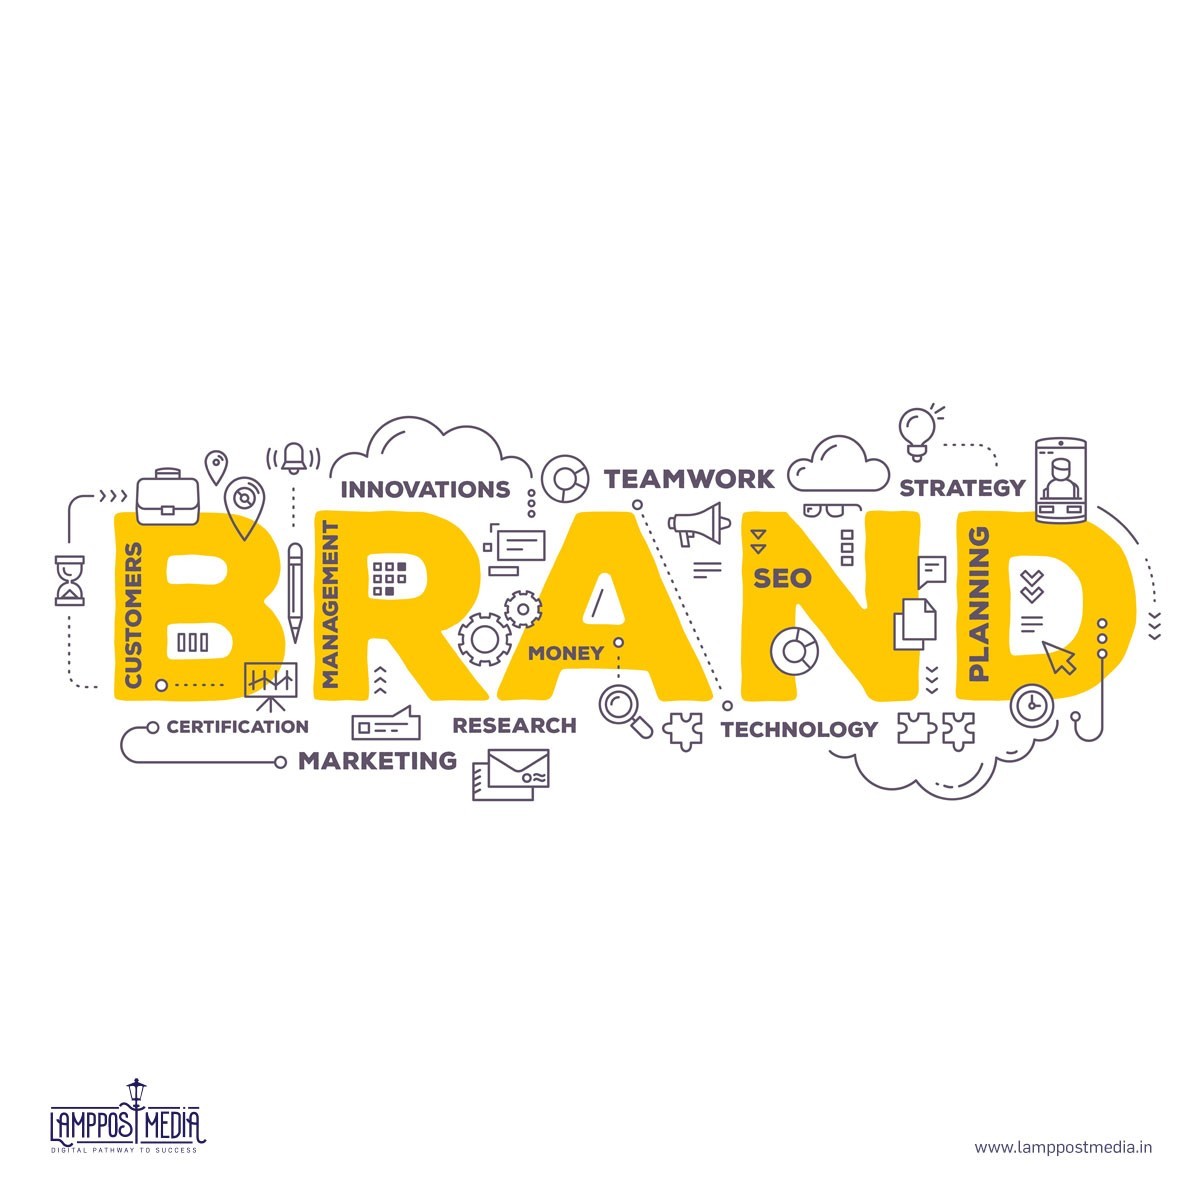 Digital branding agency